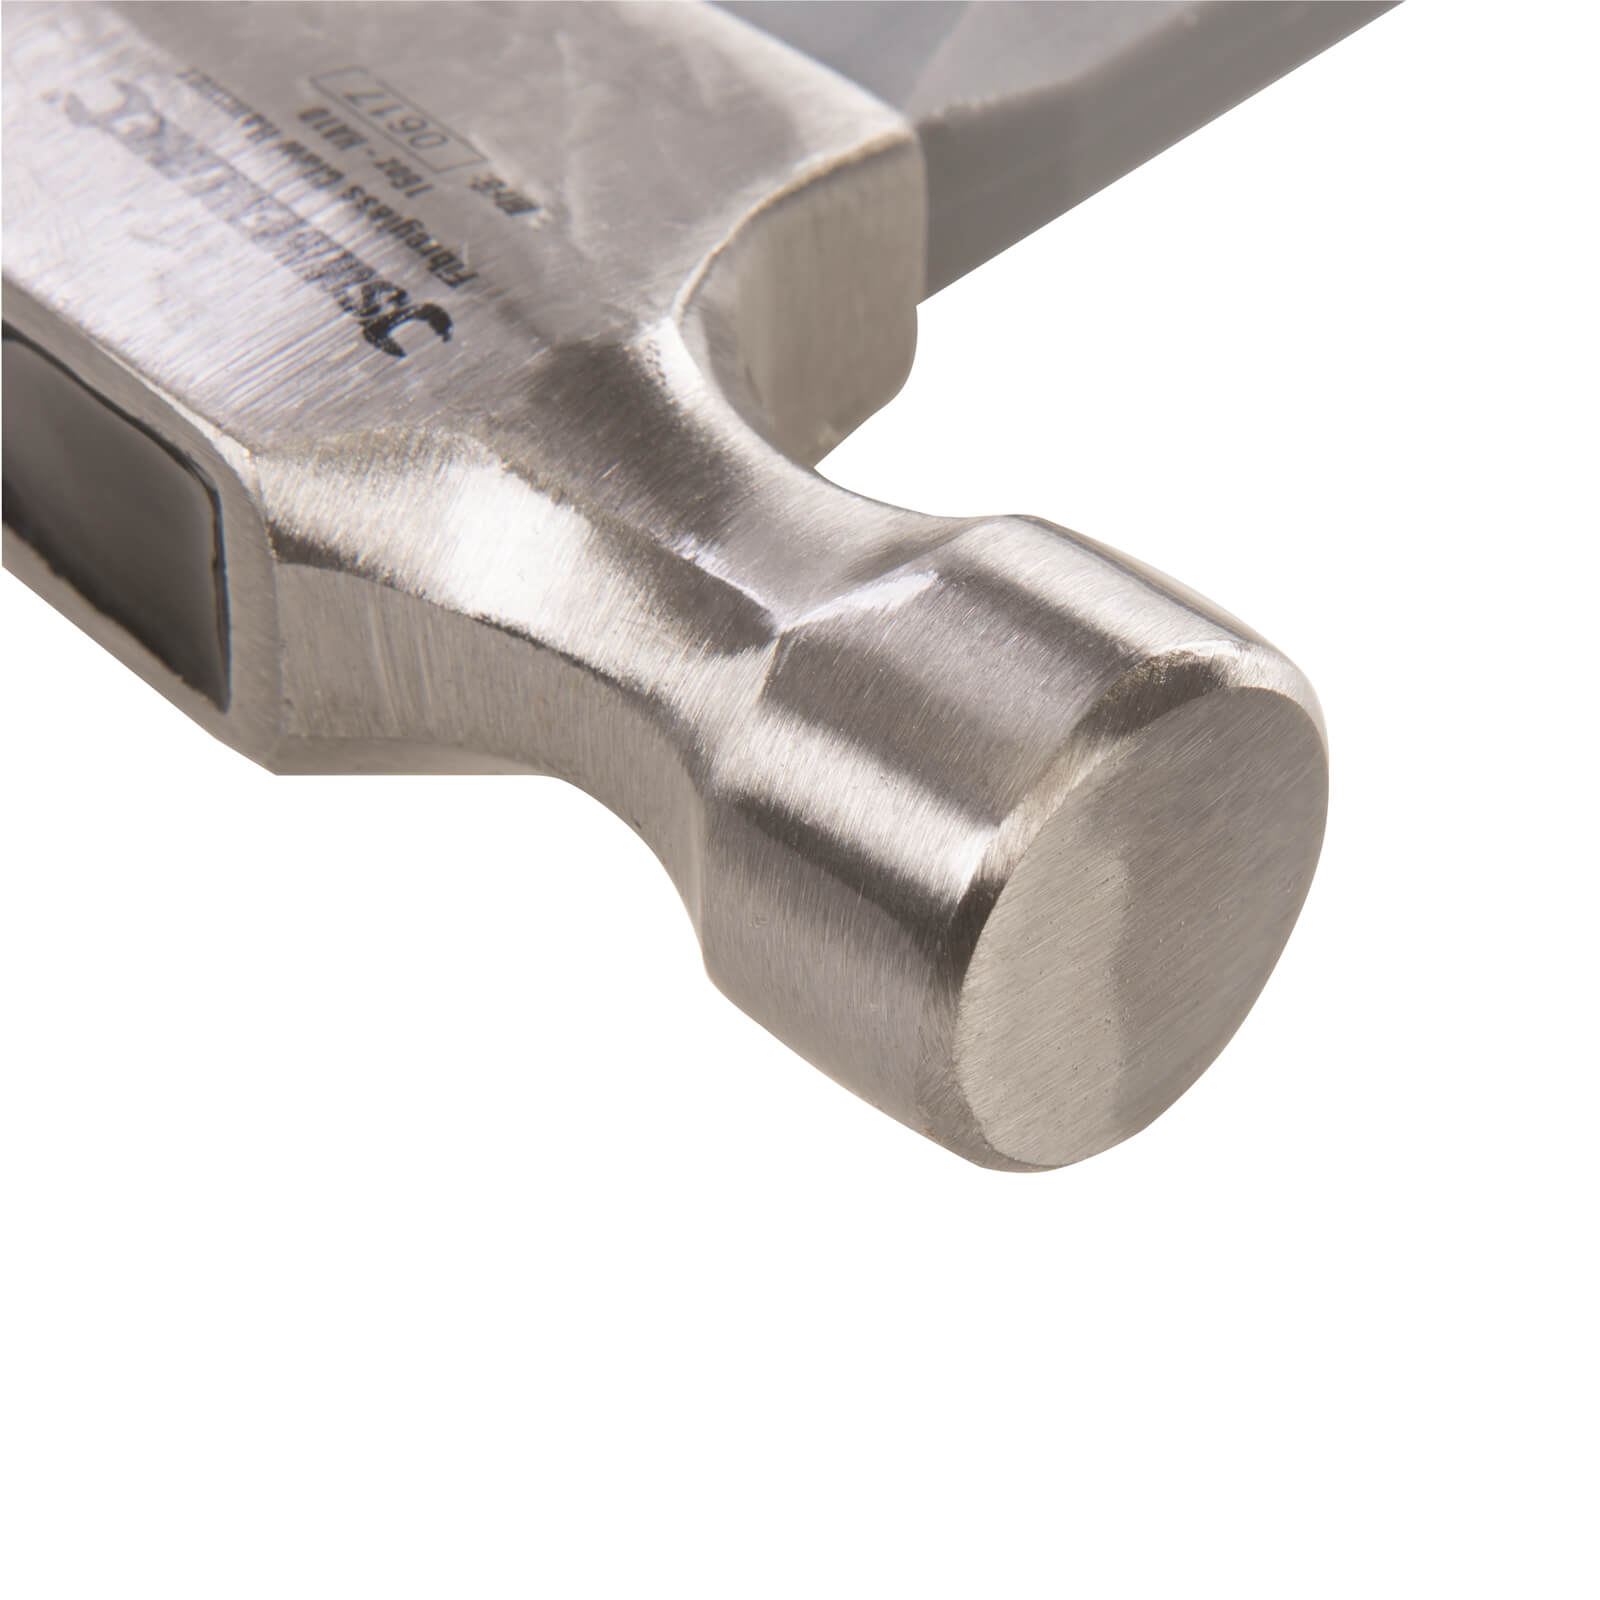 Silverline Fibreglass Claw Hammer - 16oz (454g)